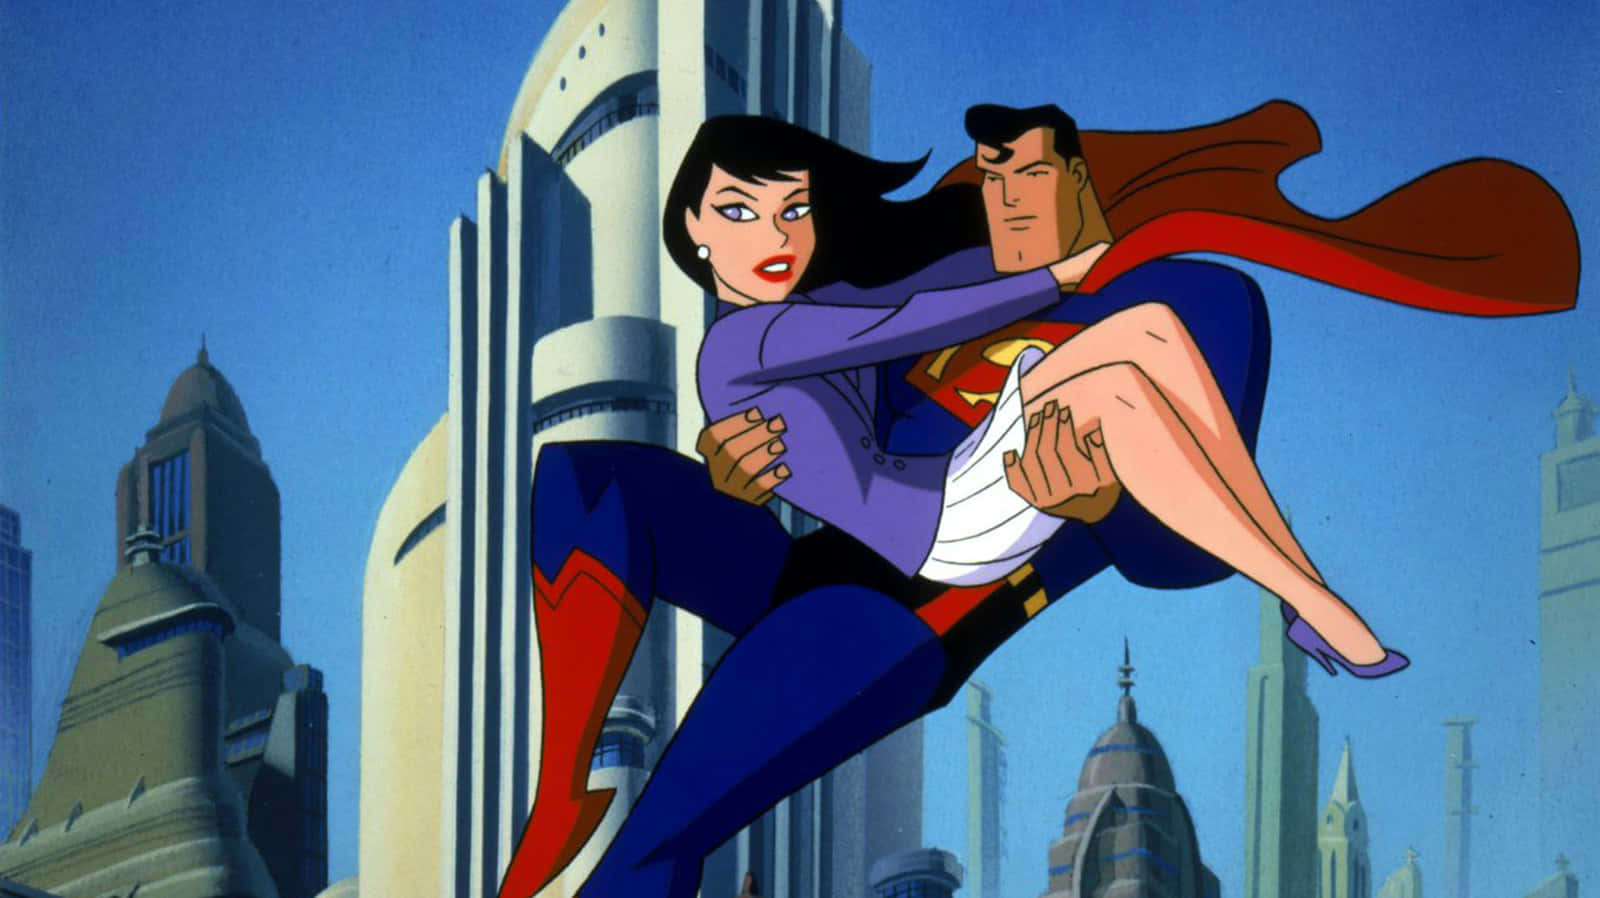 Superman soaring through the skies of Metropolis in Superman: The Animated Series. Wallpaper